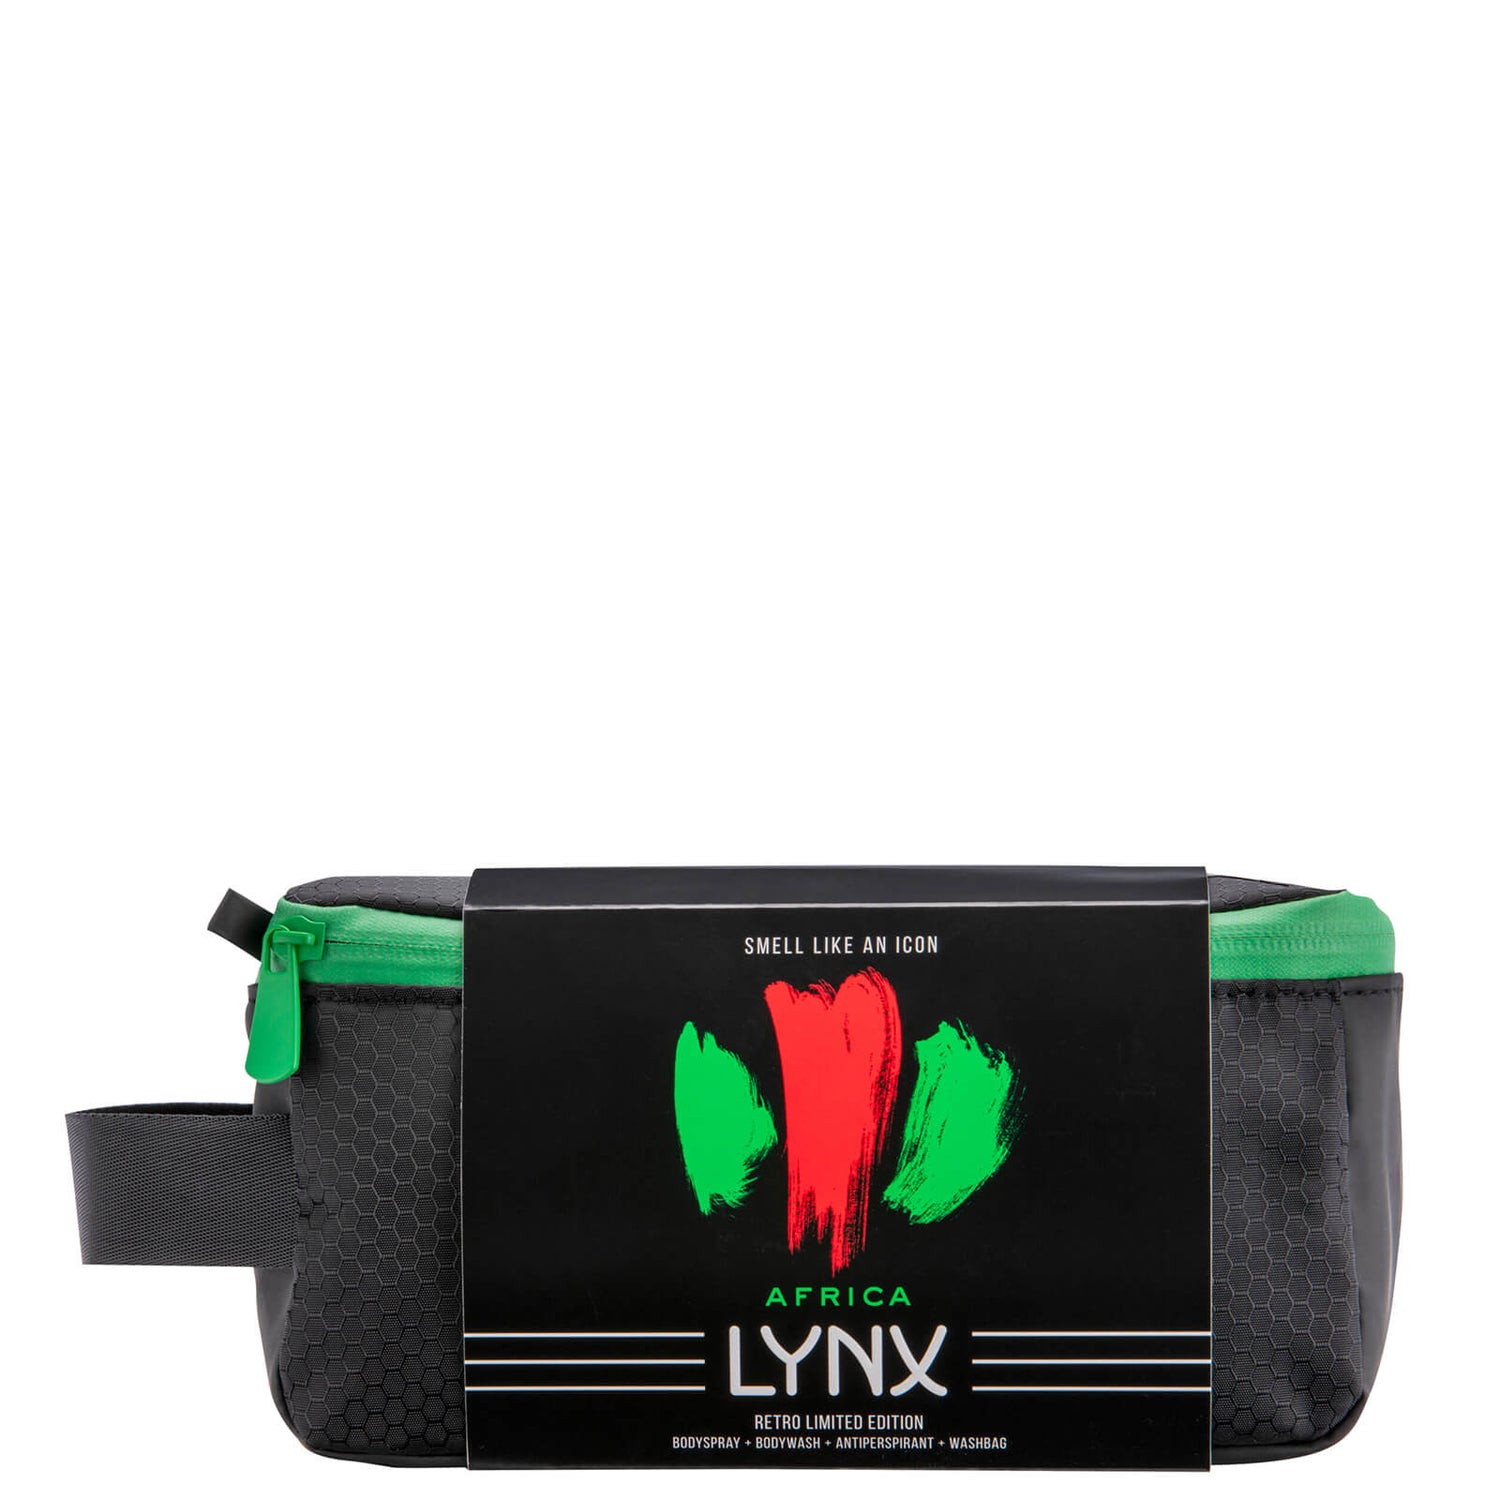 Lynx Classic Africa Washbag Gift Set 洗漱包禮品套裝